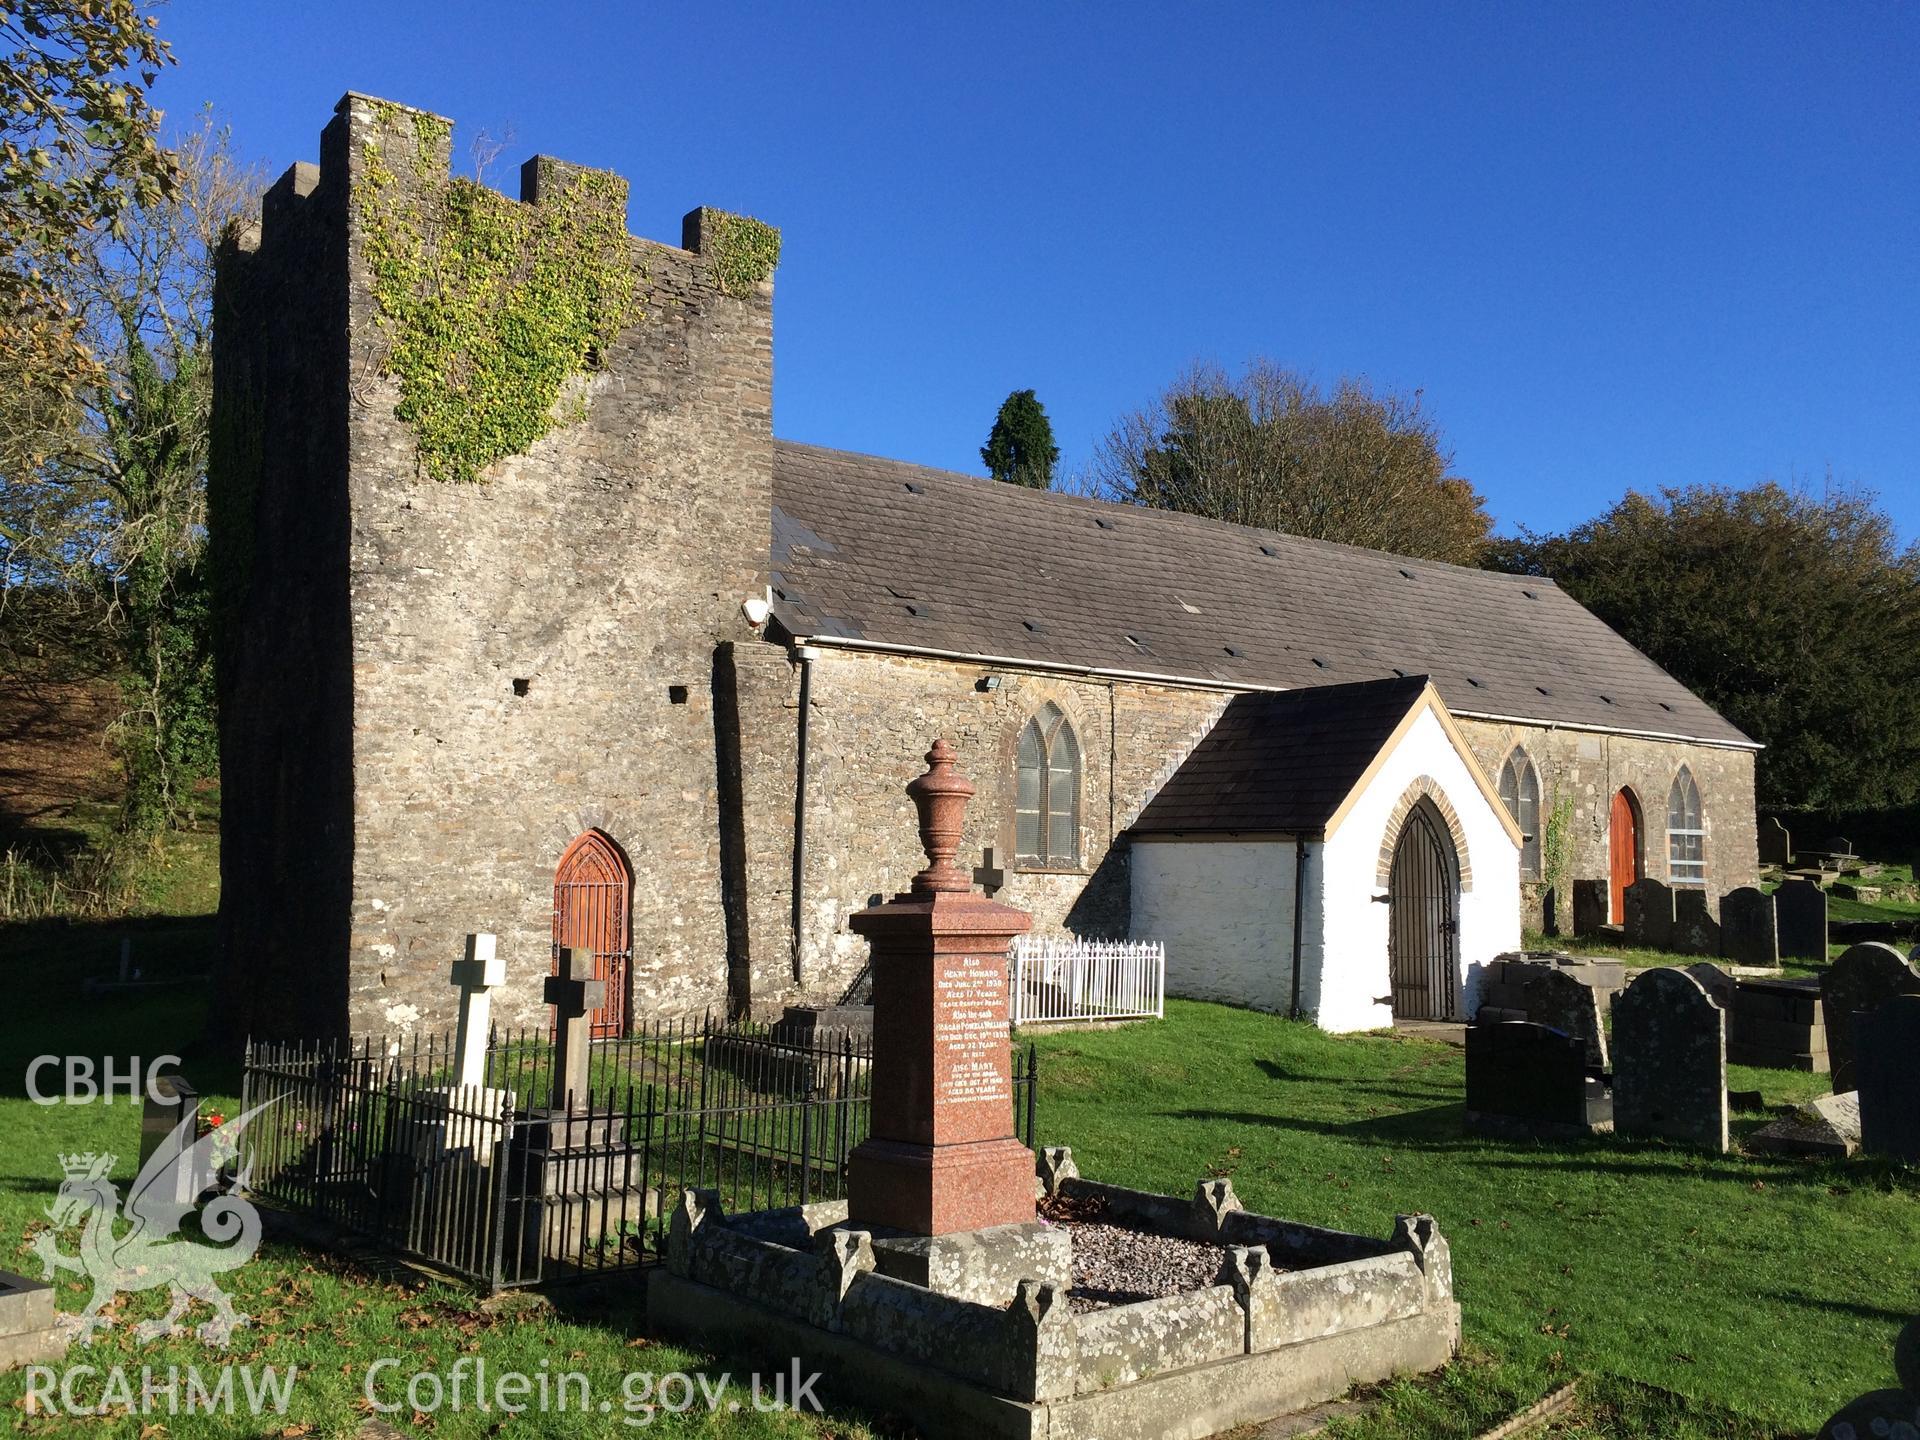 Colour photo of Llangiwg Church, taken by Paul R. Davis, 1st November 2015.